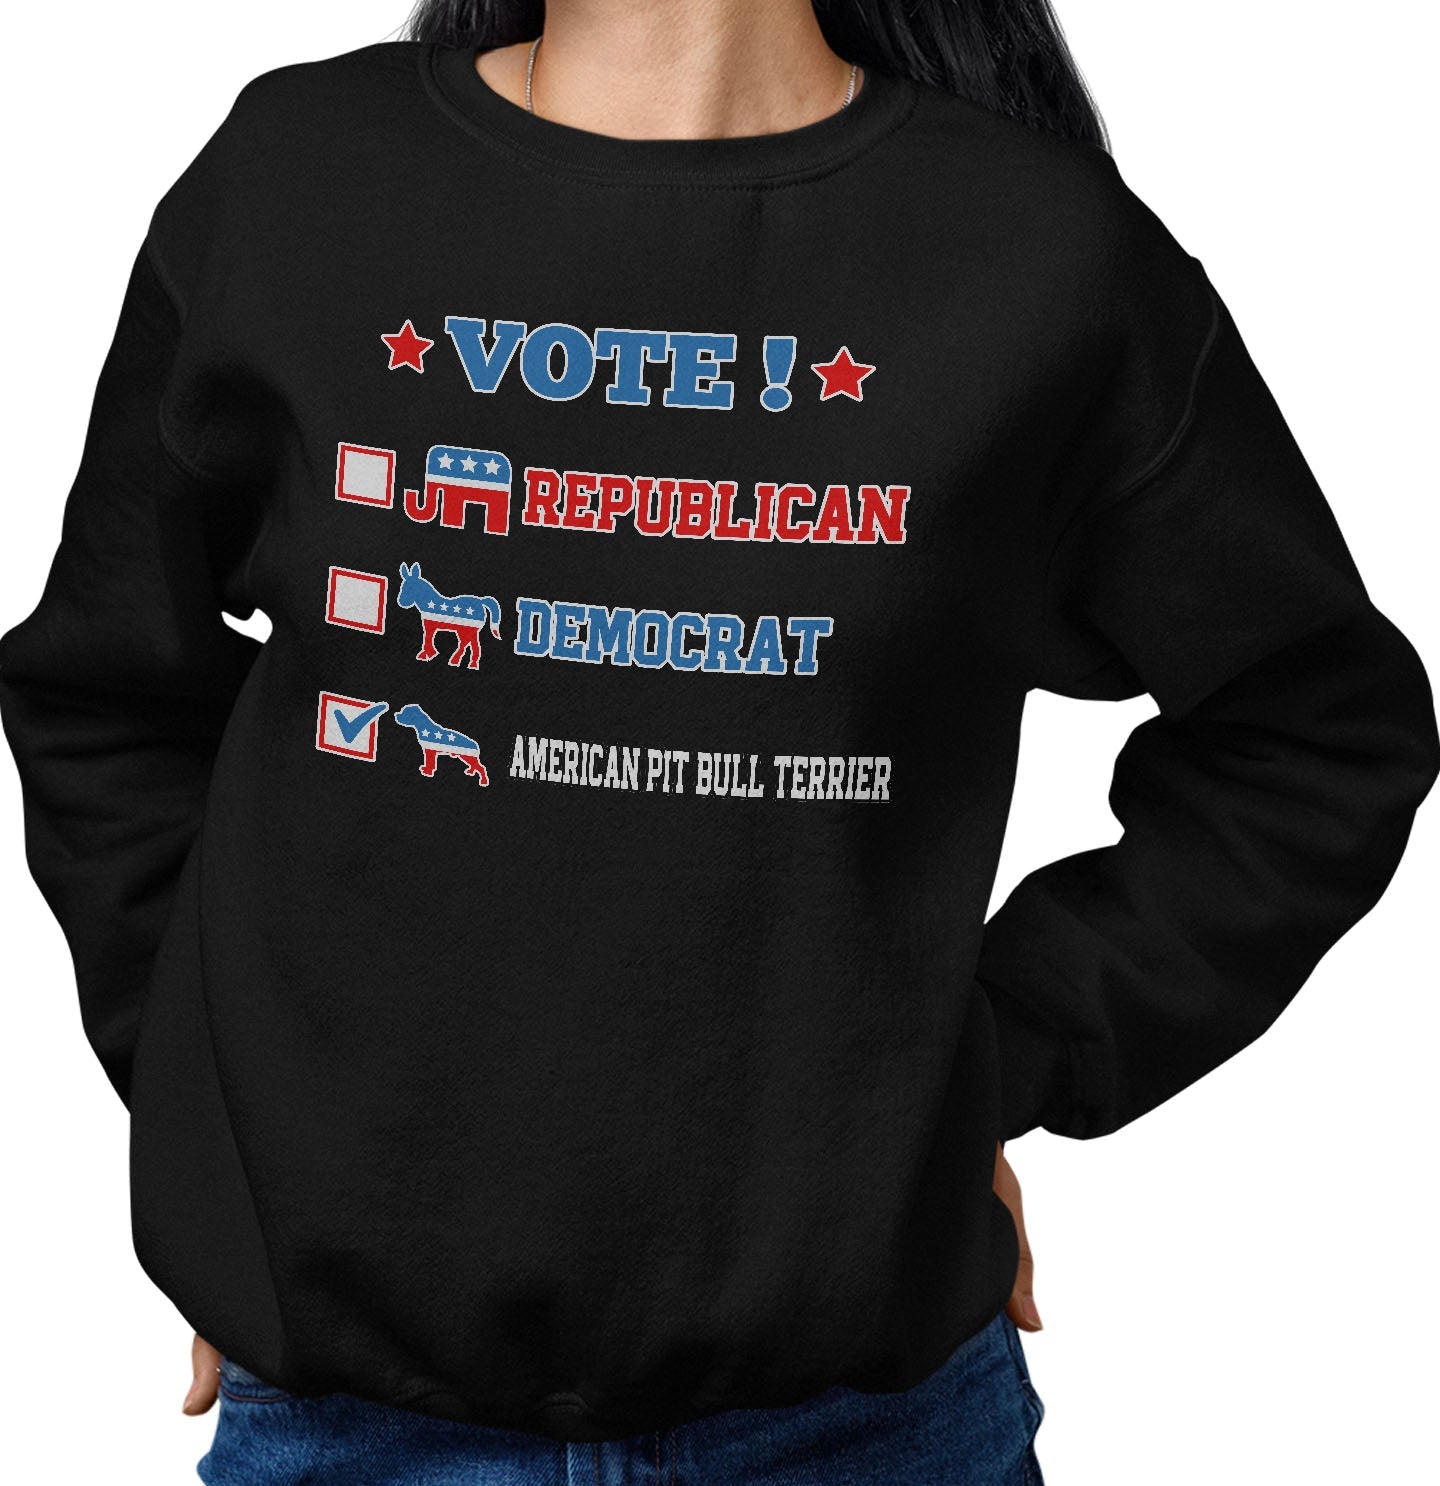 Vote for the American Pit Bull Terrier - Adult Unisex Crewneck Sweatshirt